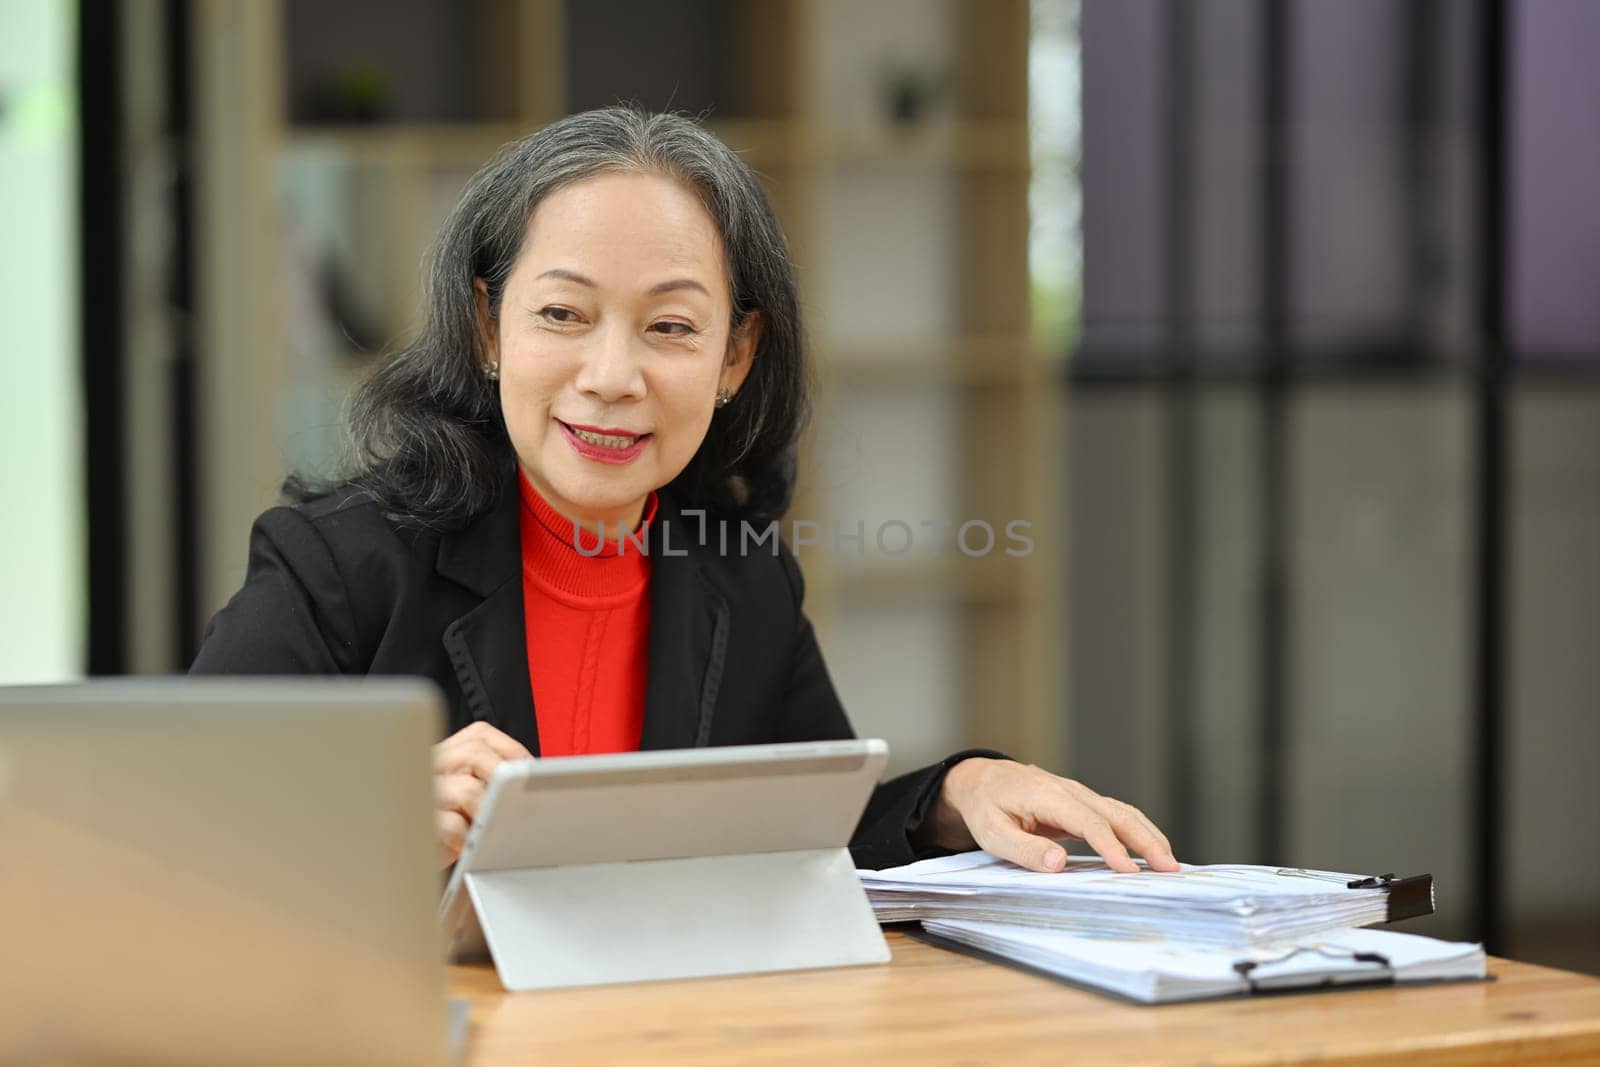 Portrait of smiling mature business woman manager using digital tablet at desk.